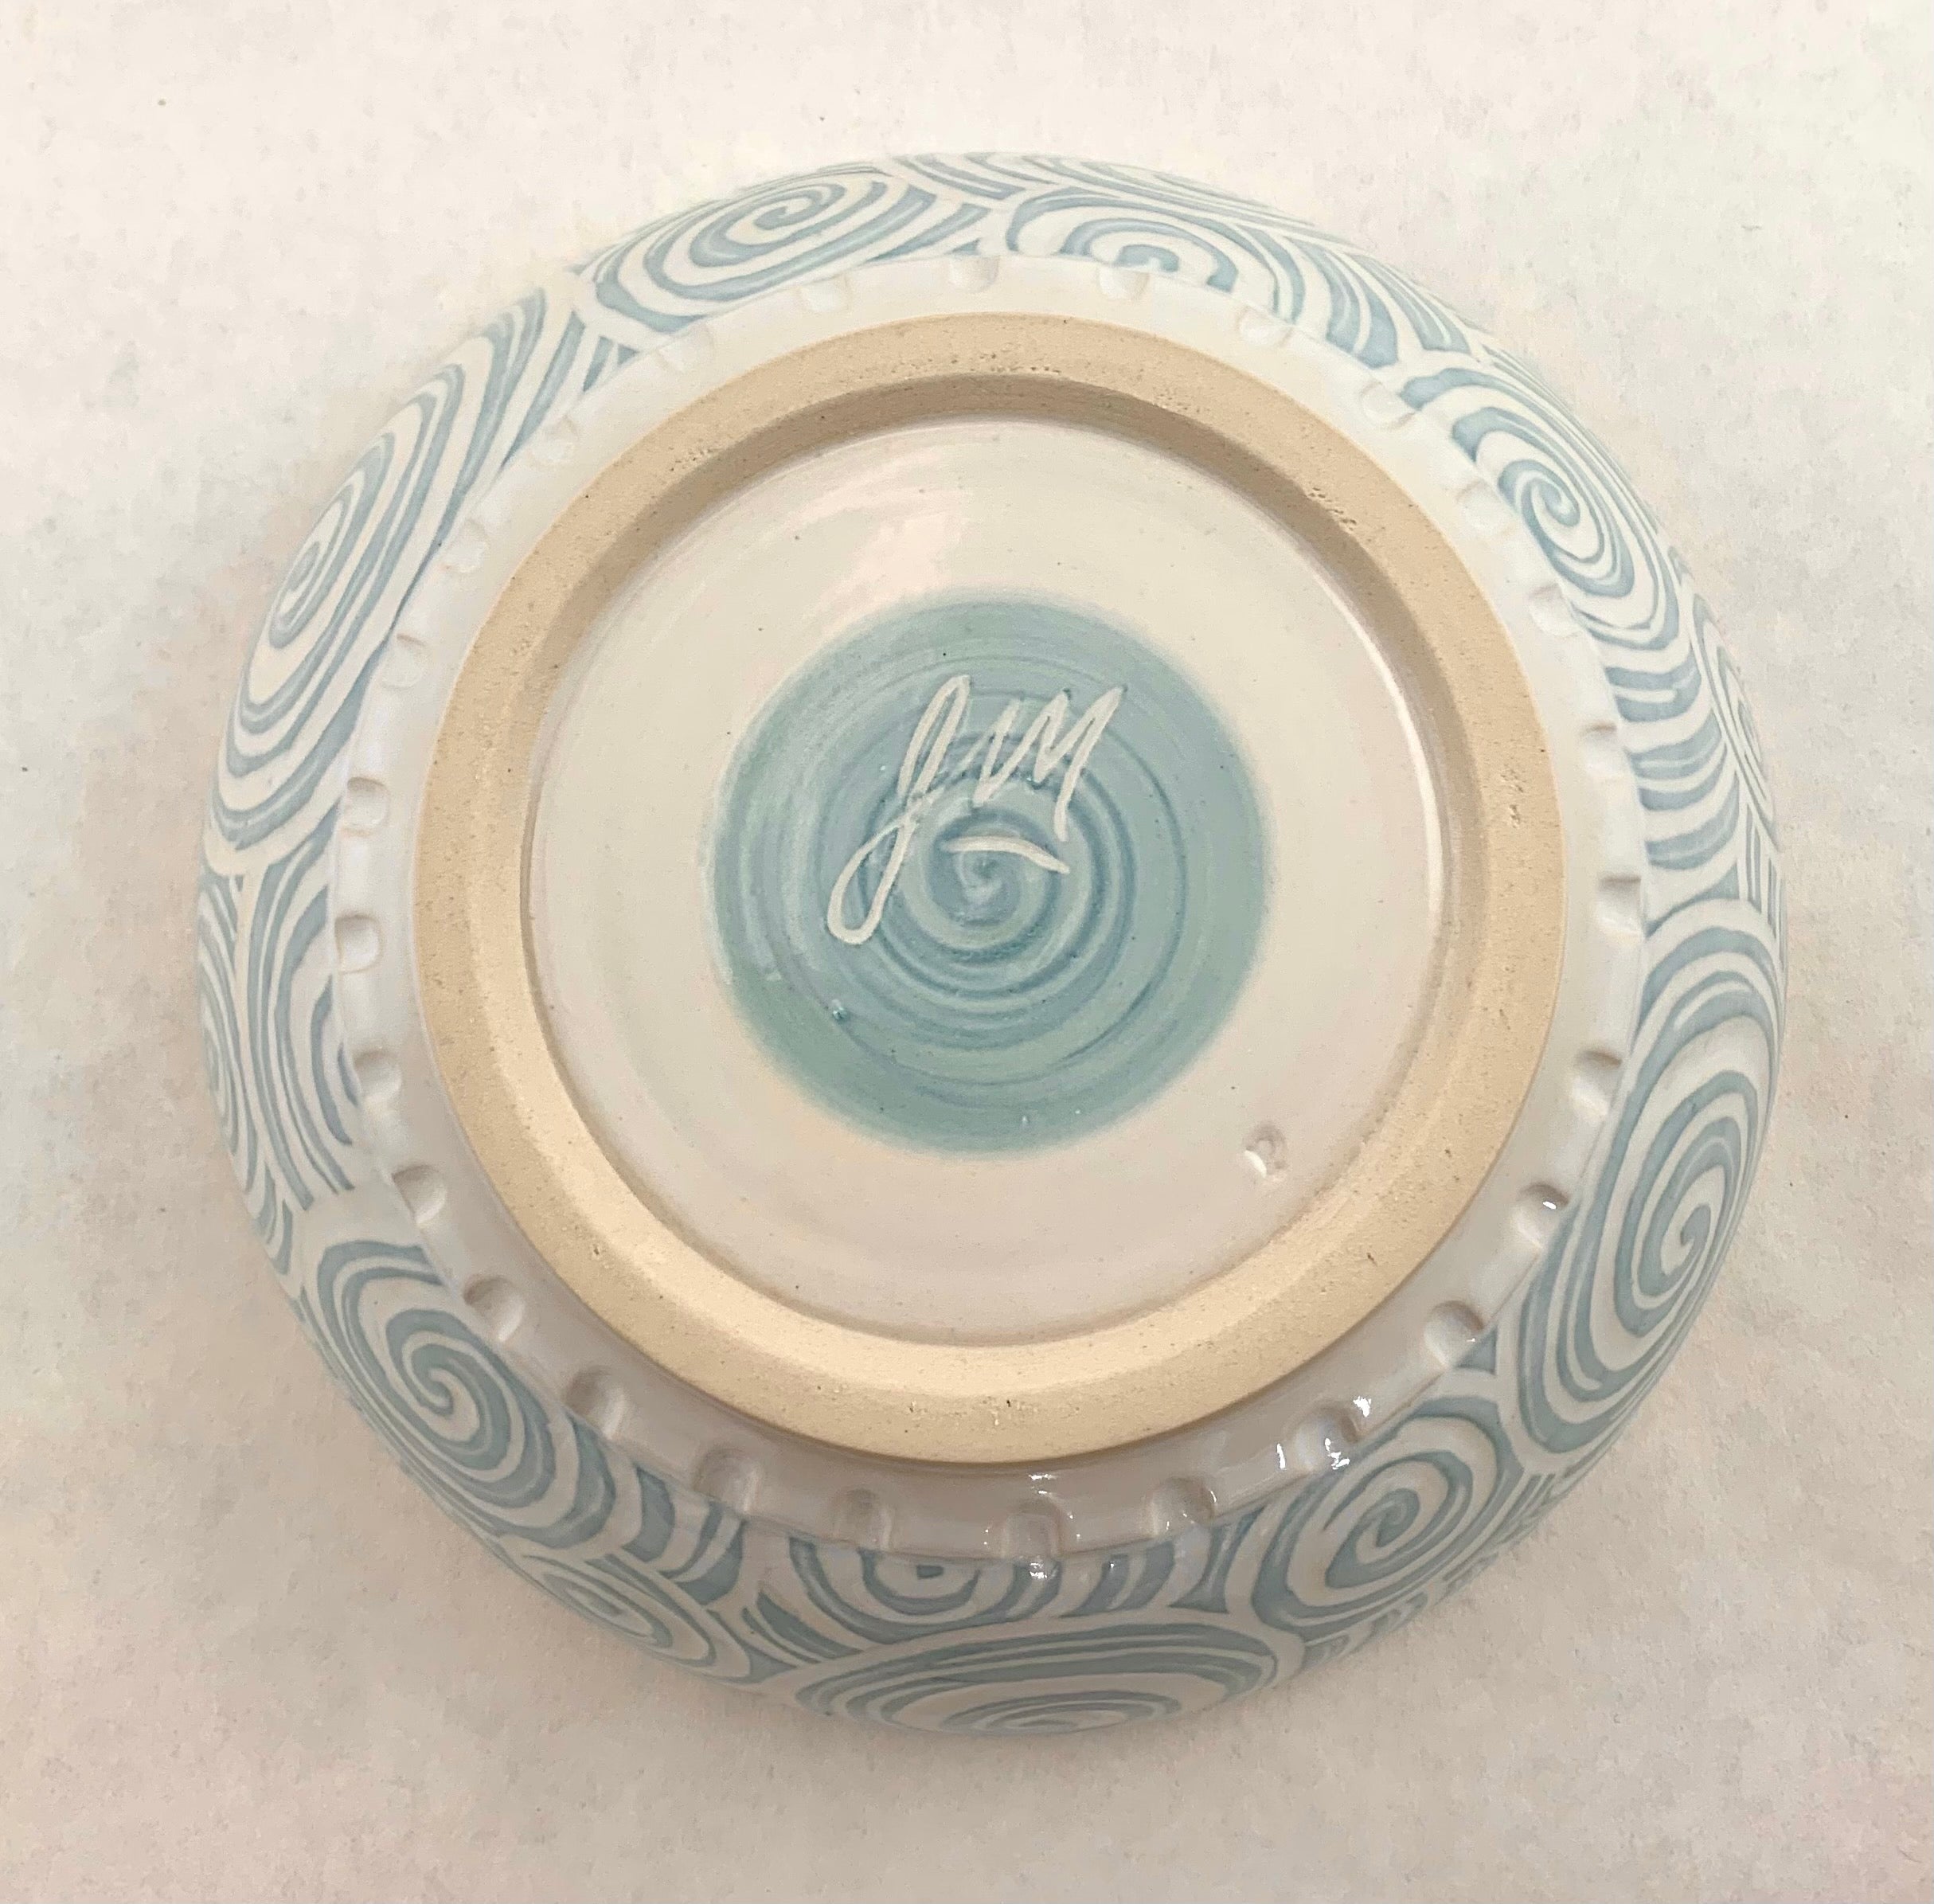 Service Bowl (lg) - blue swirls - porcelain